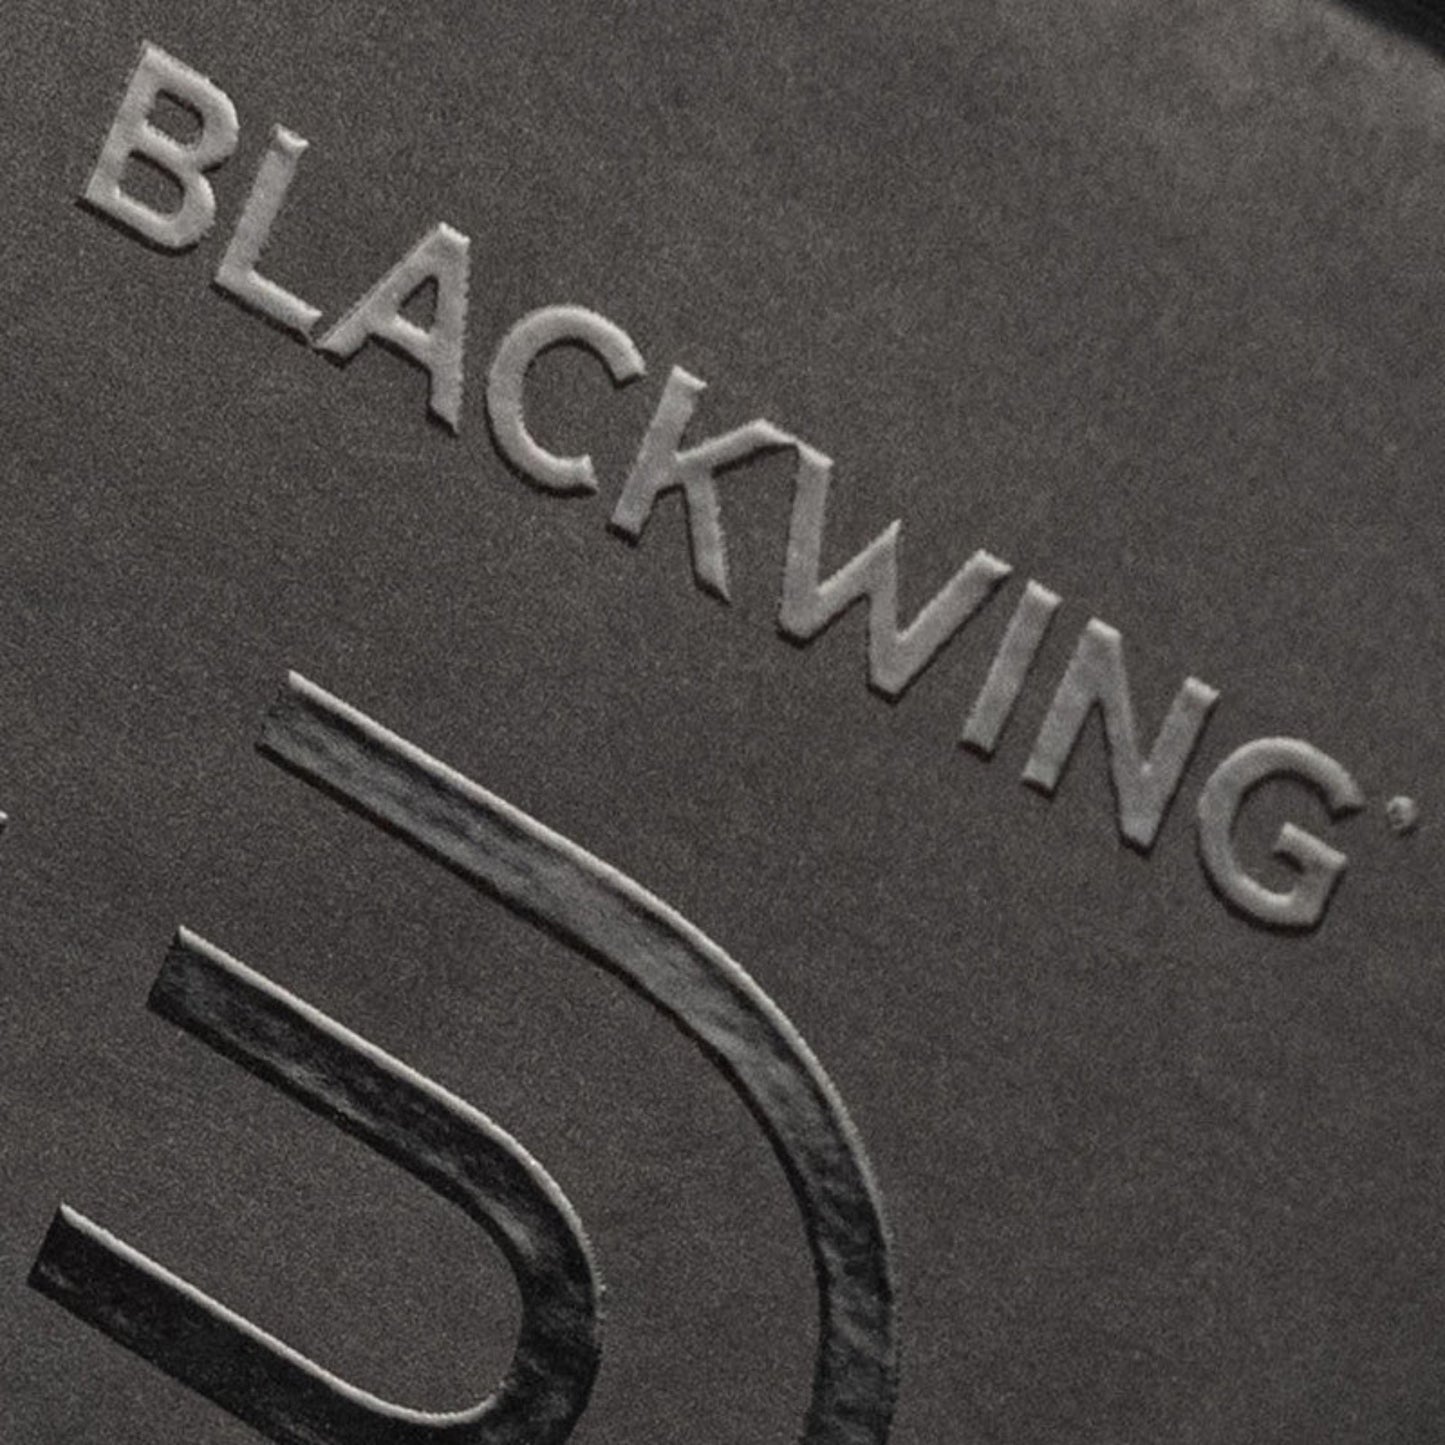 Blackwing - Pearl Graphite Pencils - Balanced - Grierson Studio